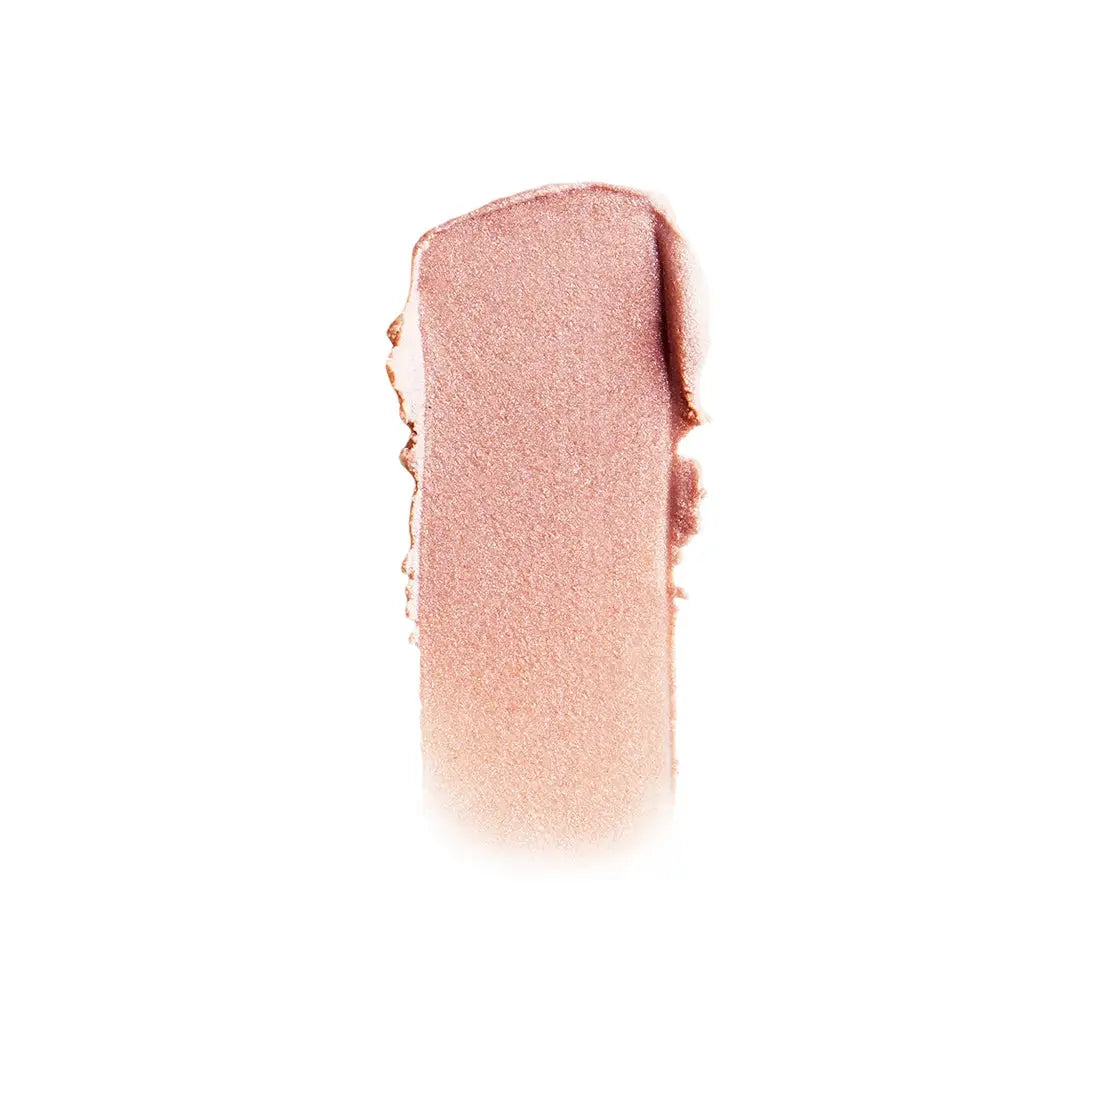 Kjaer Weis Cream Blush Refill - Inner Glow Free Shipping 